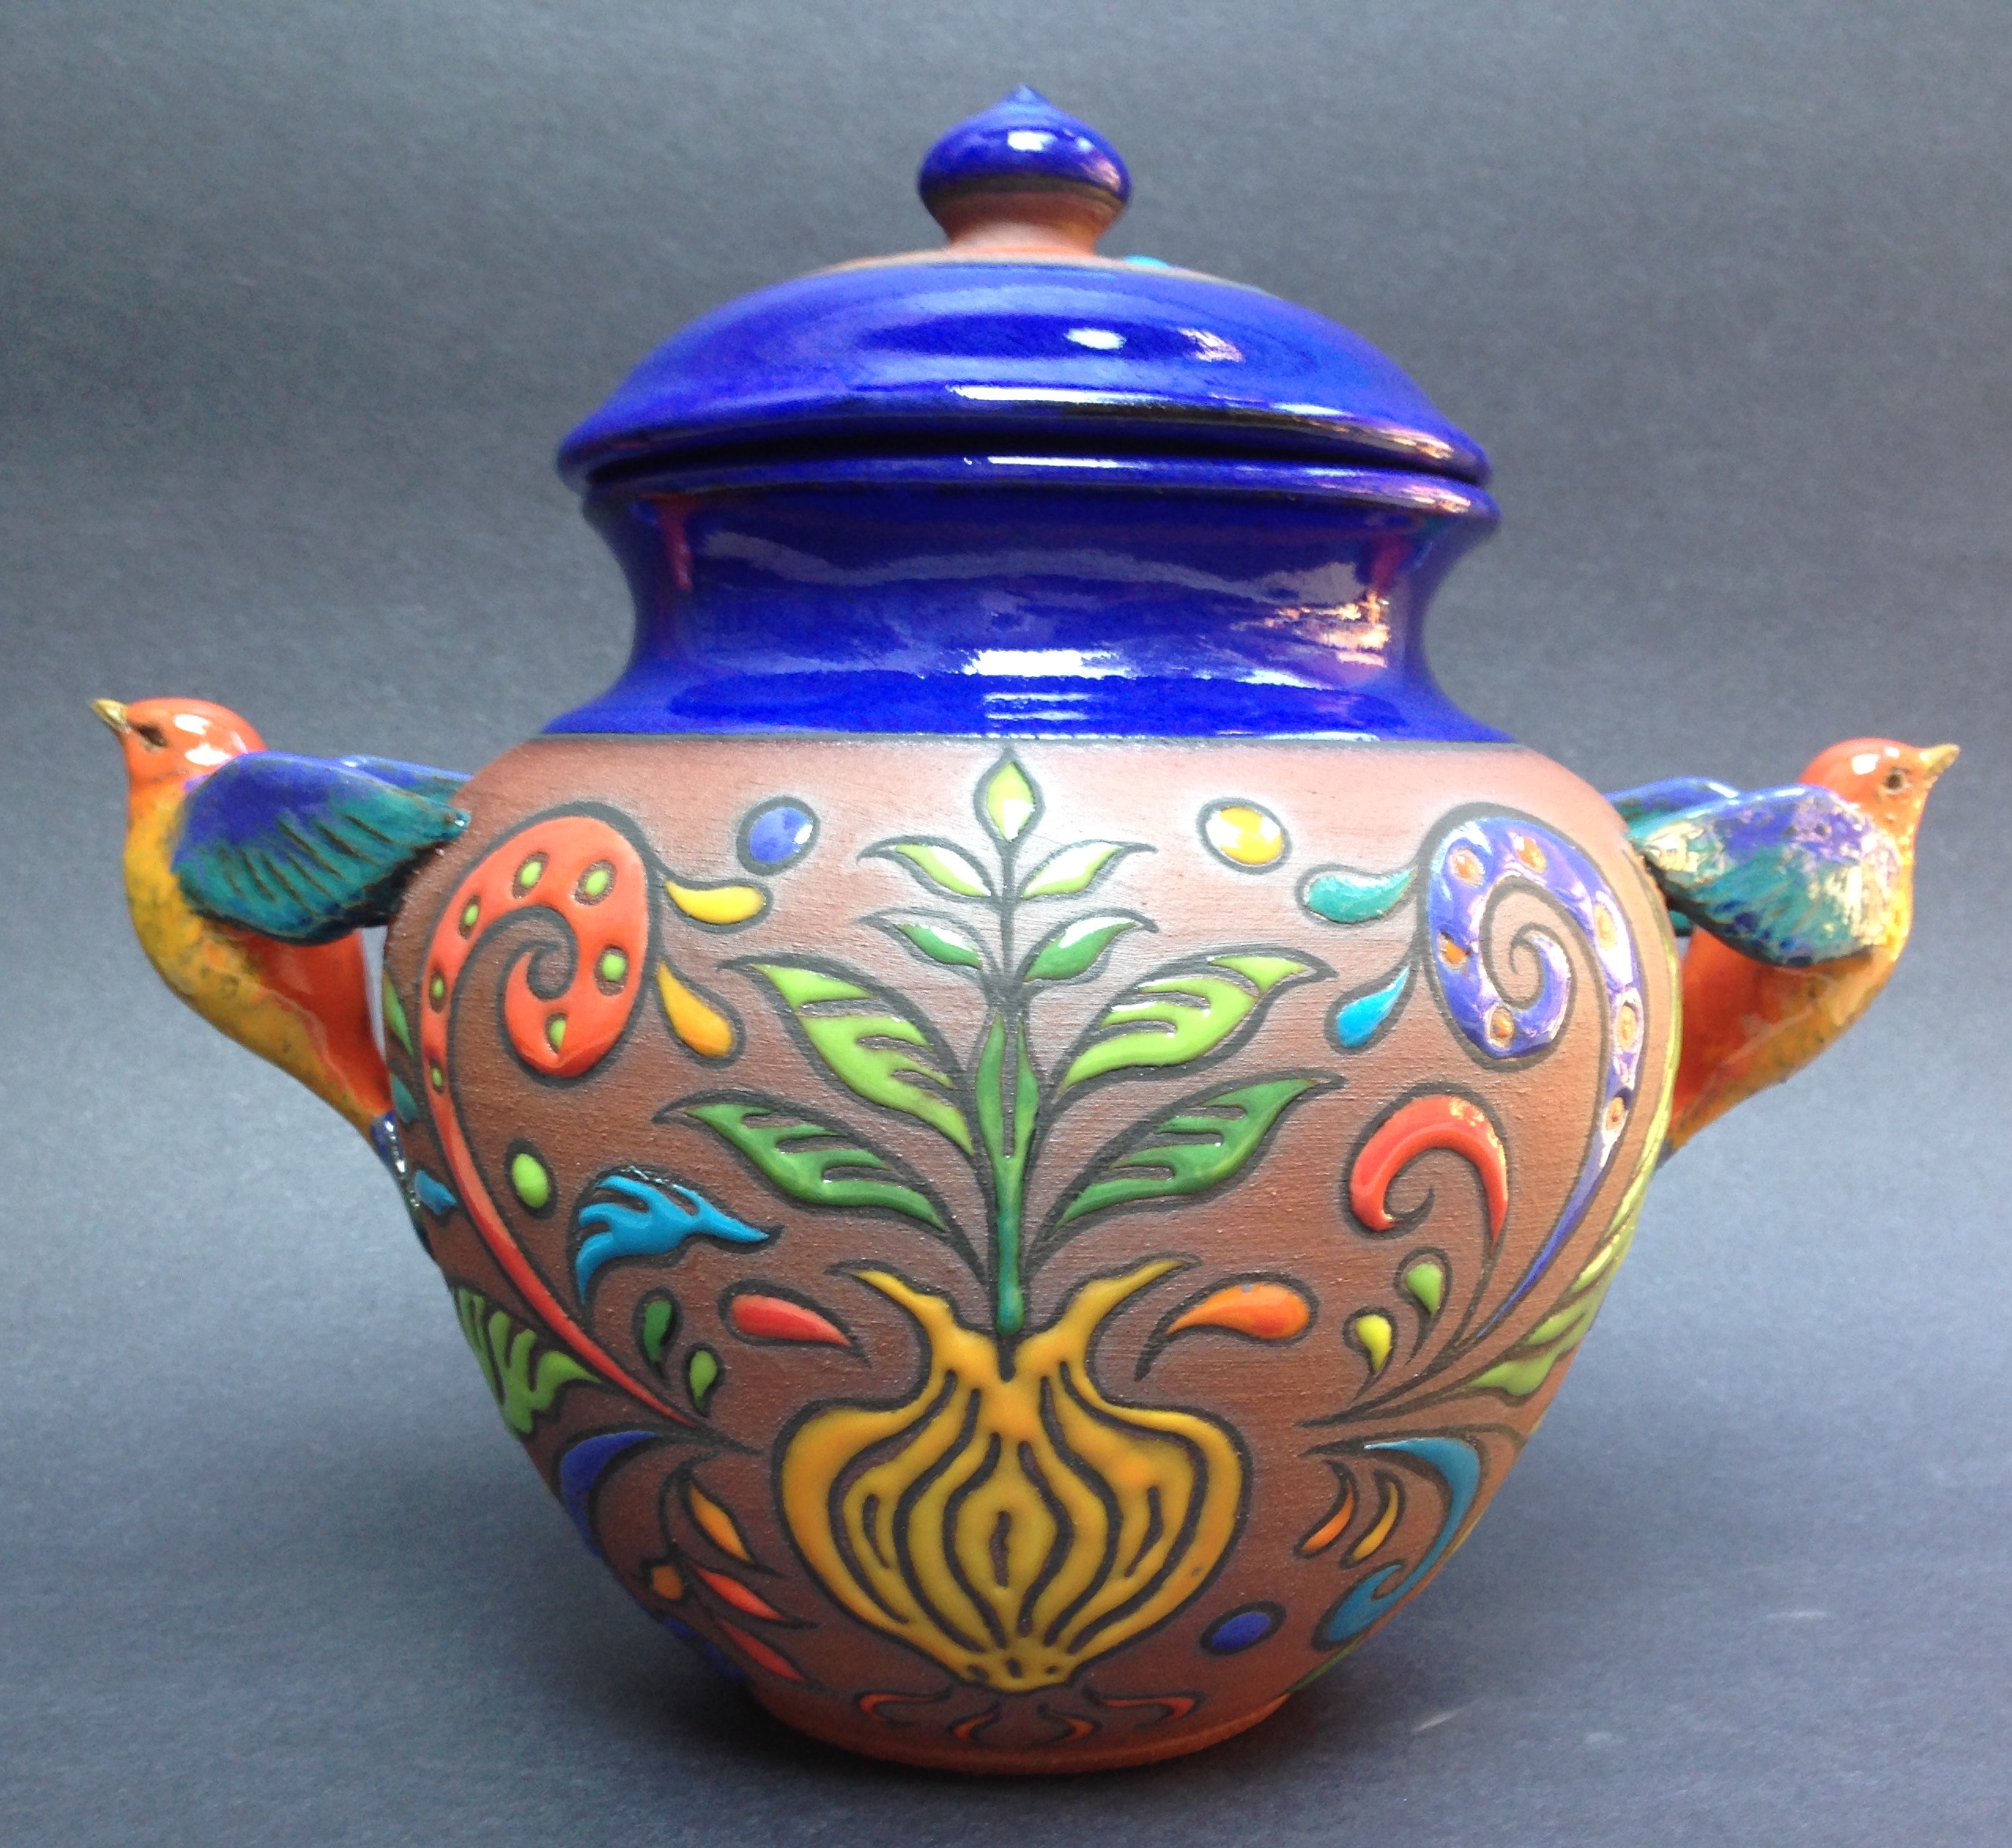 Ceramic Ashes Urn with Colorful Cuerda Seca Design and Bird Handles